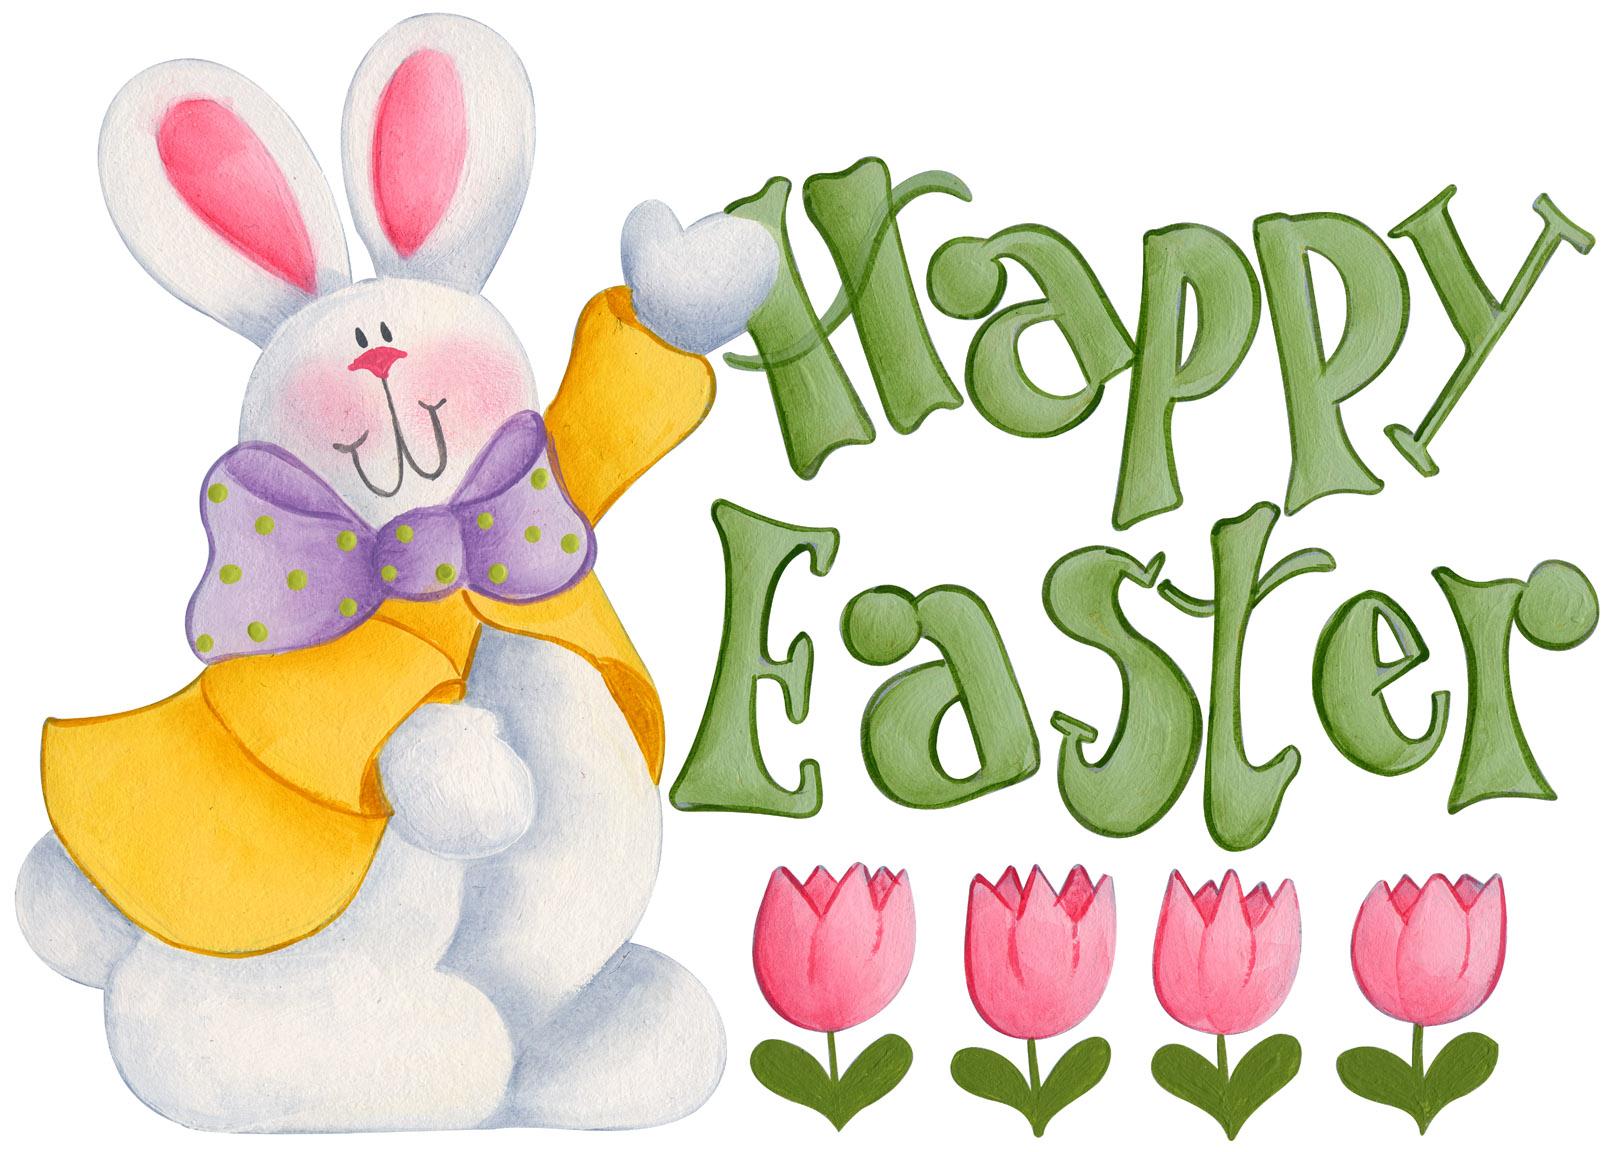 Happy Easter background free desktop background wallpaper image